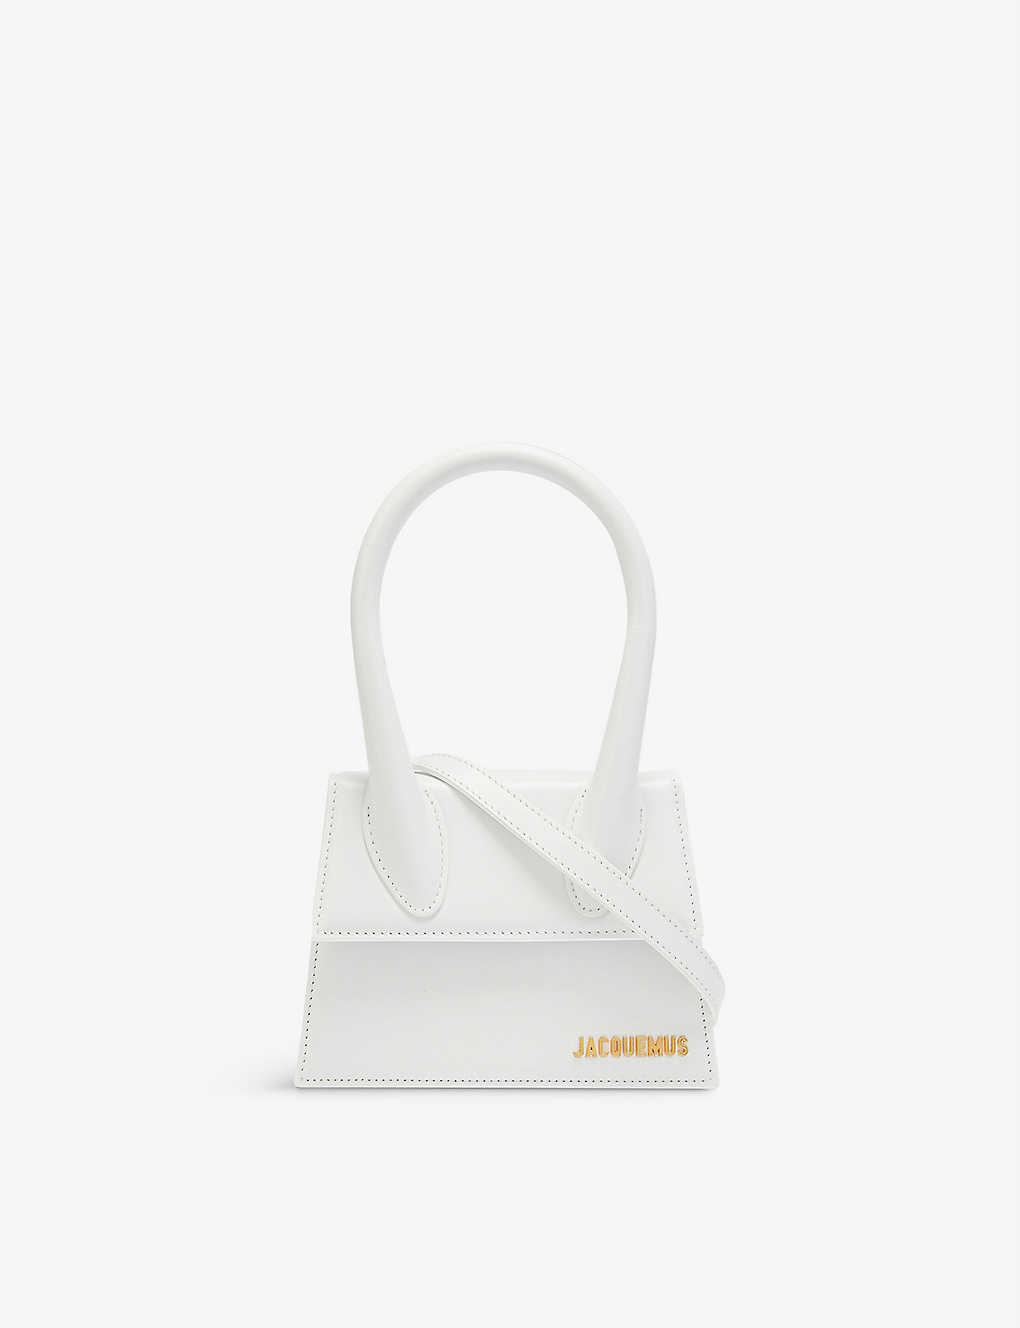 JACQUEMUS - Le Chiquito medium leather top handle bag | Selfridges.com